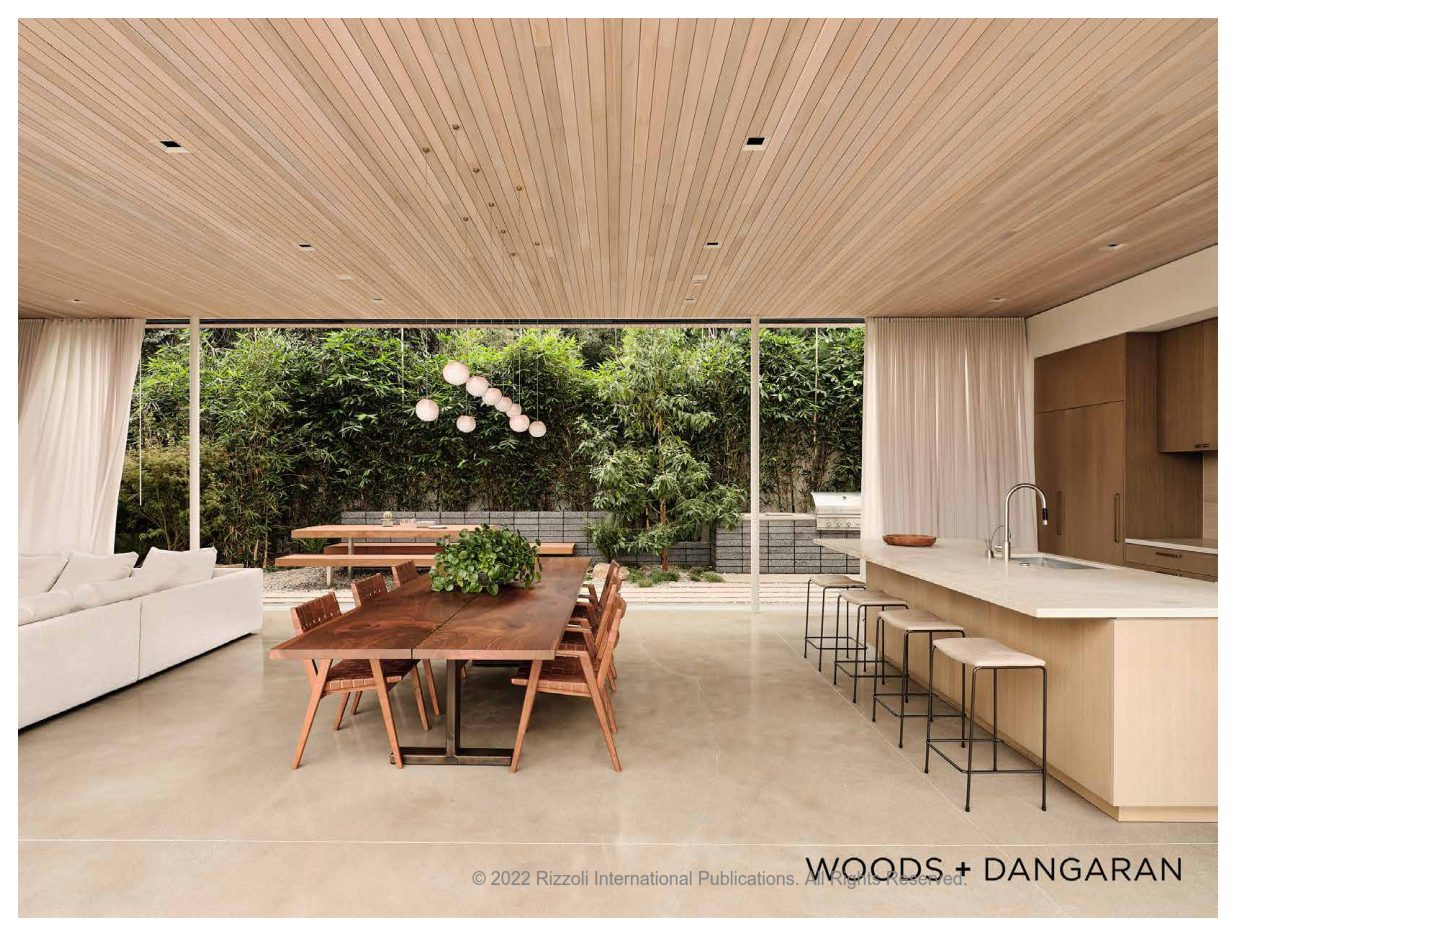 Woods + Dangaran: Architecture and Interiors